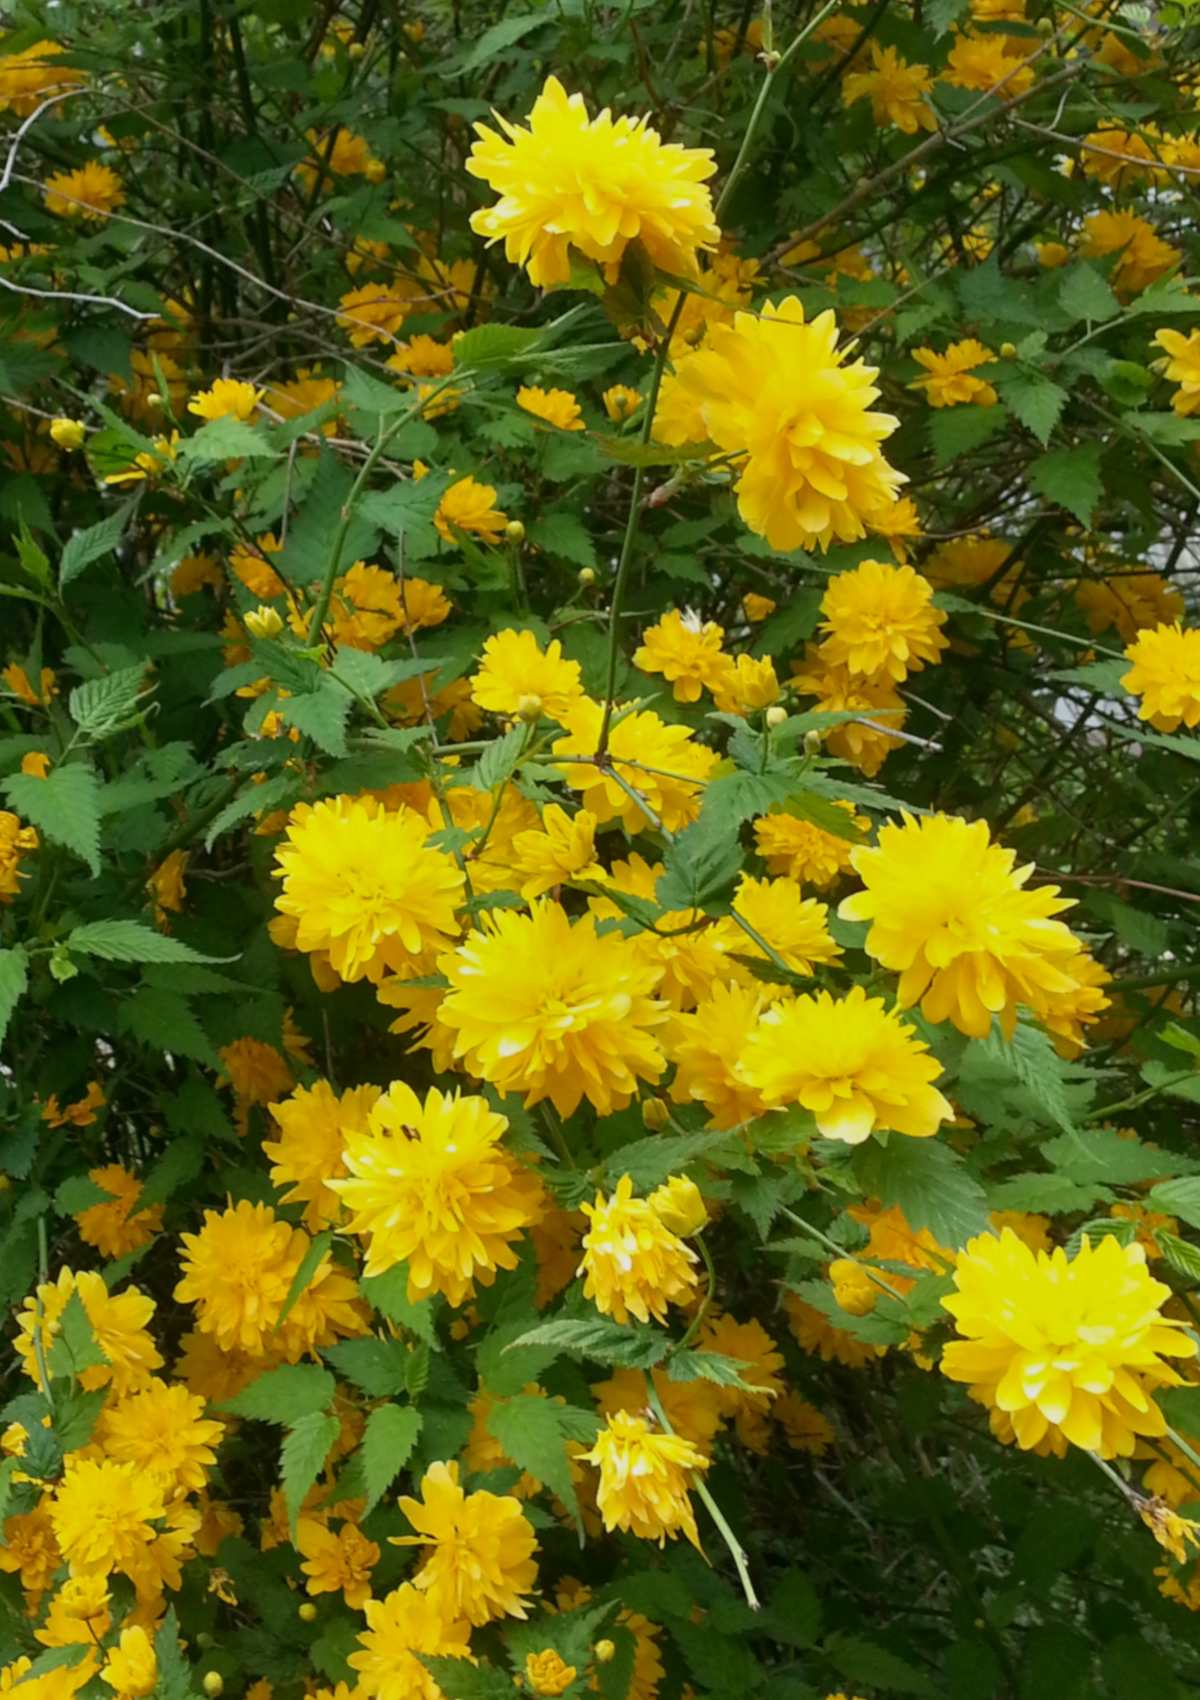 Full shrub with yellow kerria blooms.